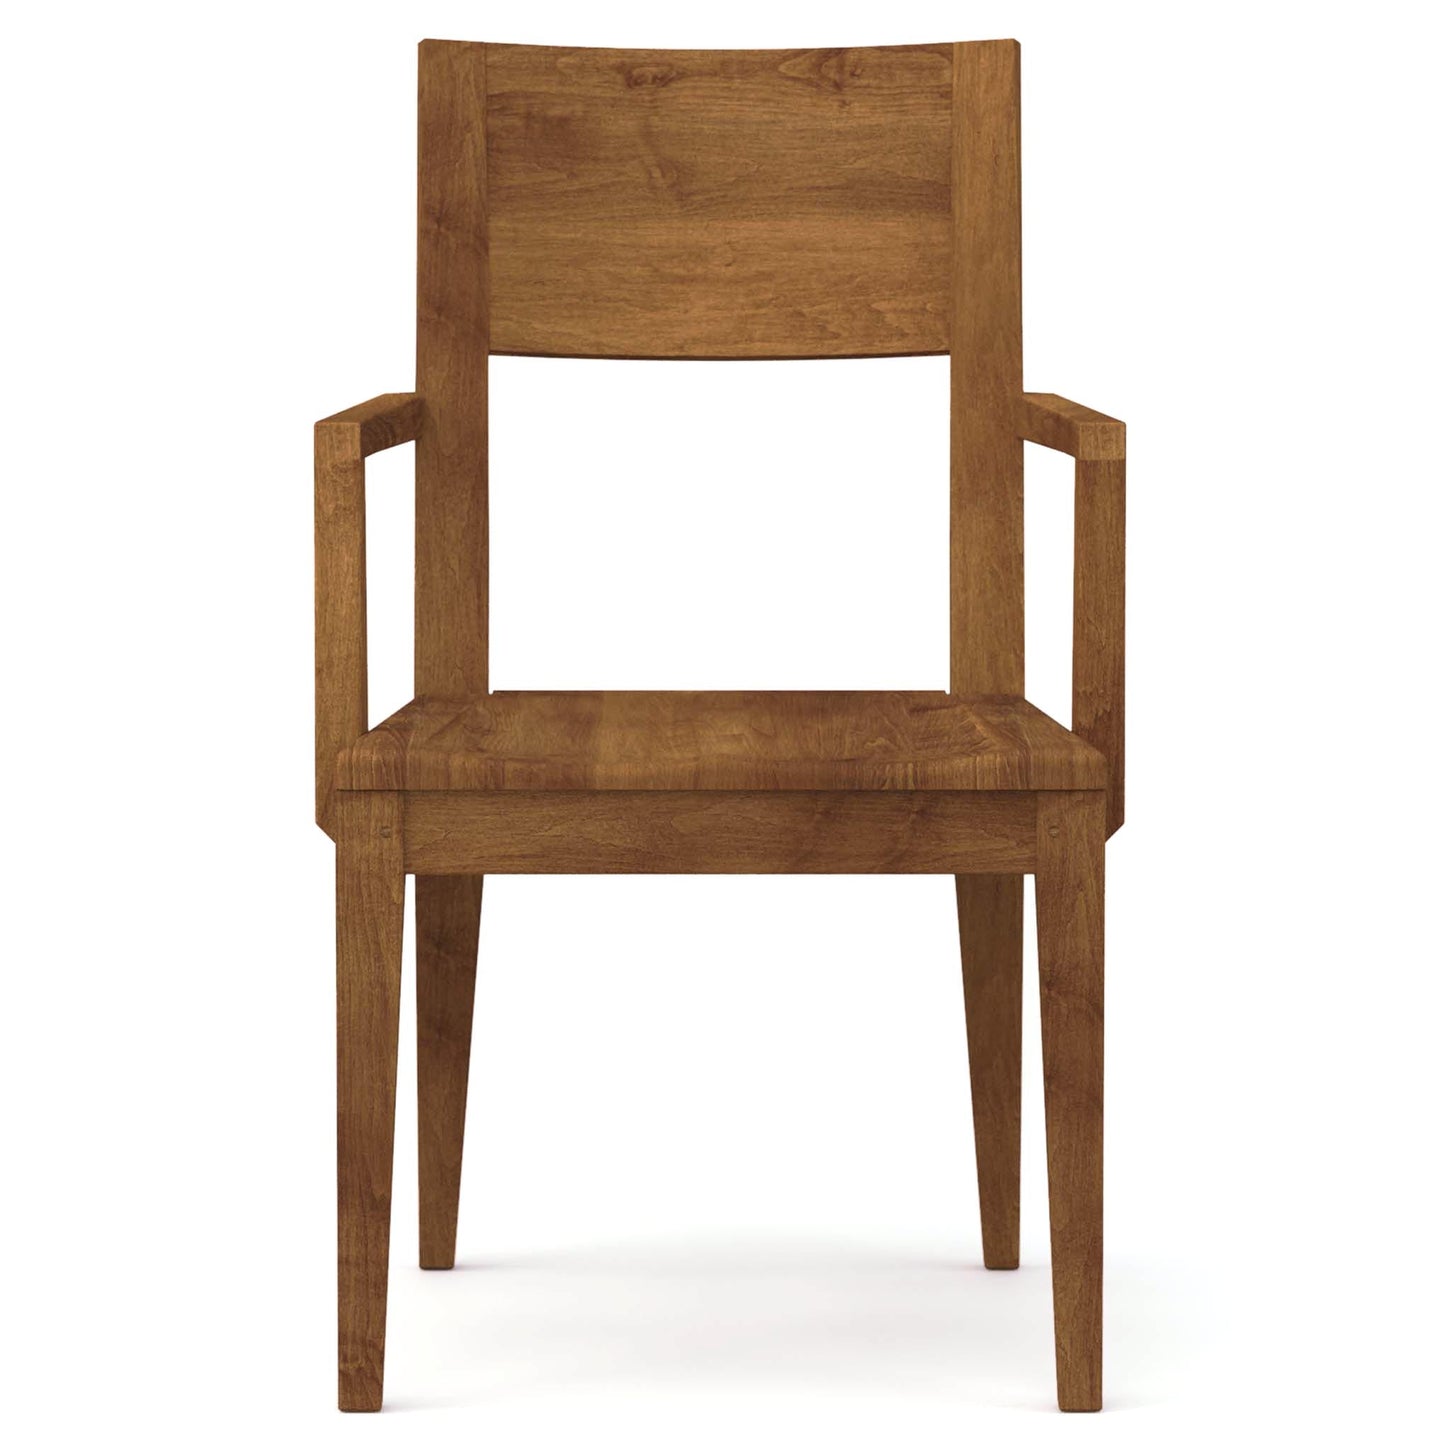 Dwyer Wooden Arm Chair